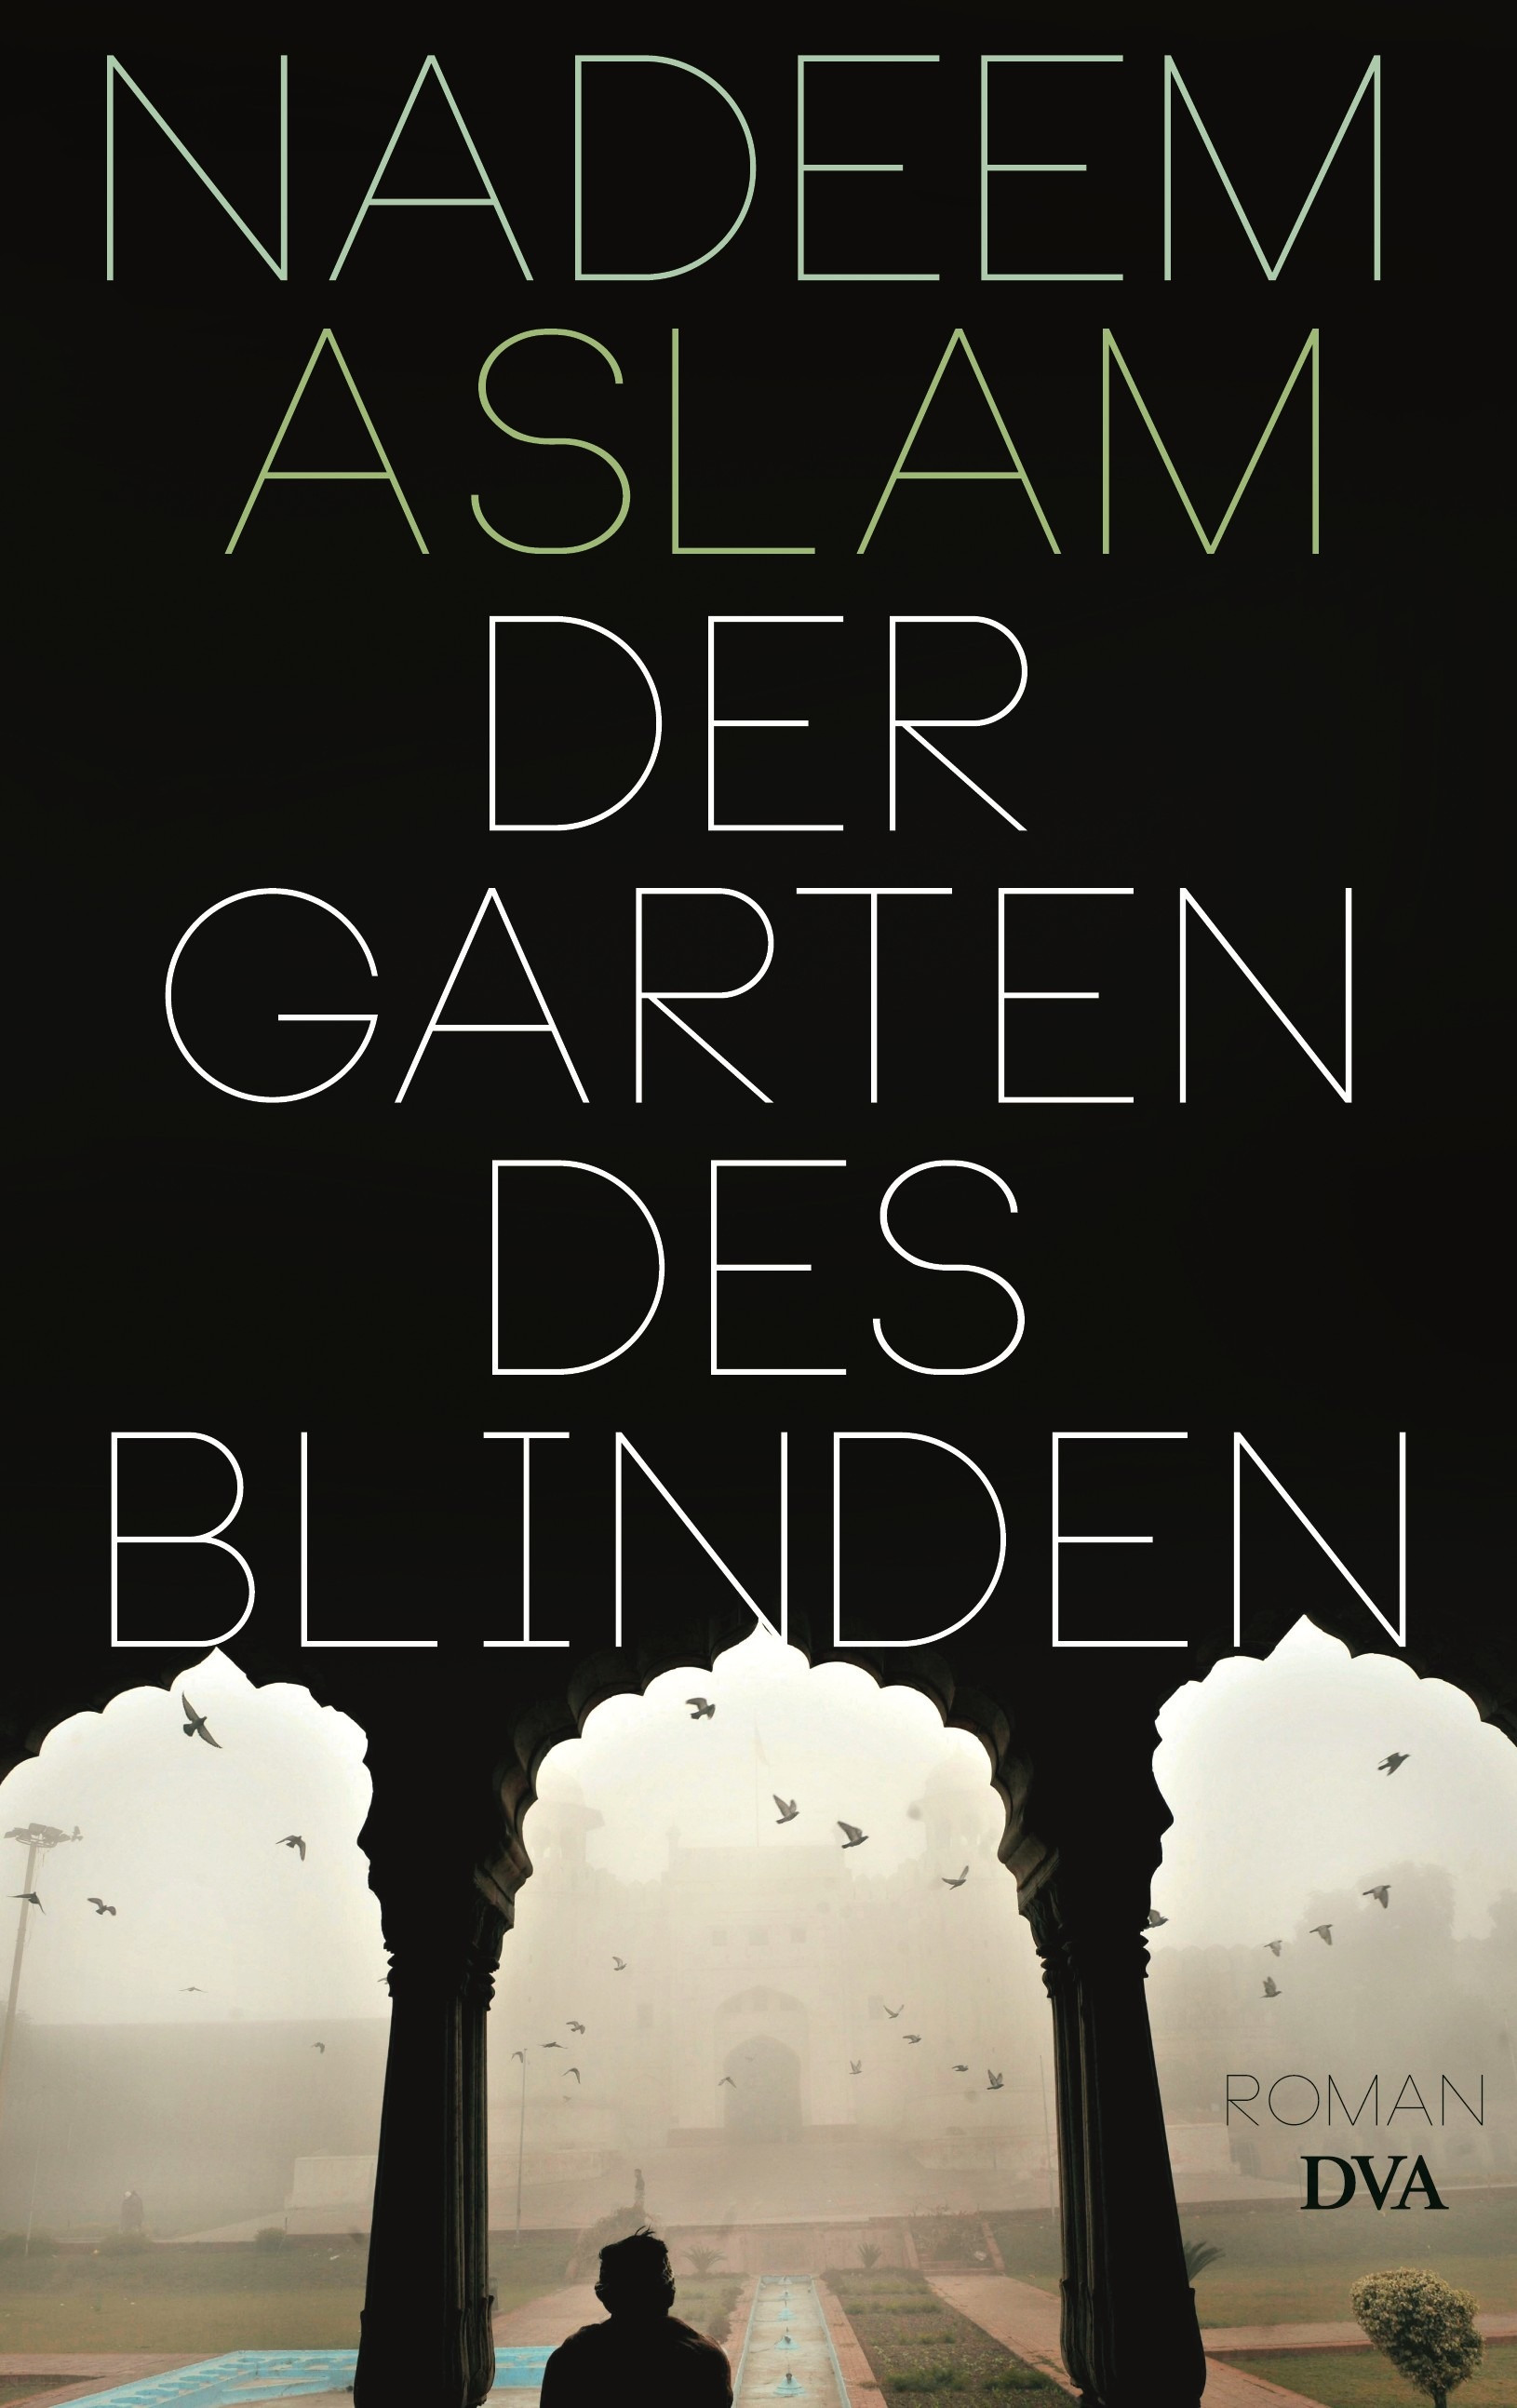 Buchcover Nadeem Aslam: "Der Garten des Blinden"; Deutsche Verlags-Anstalt (DVA)